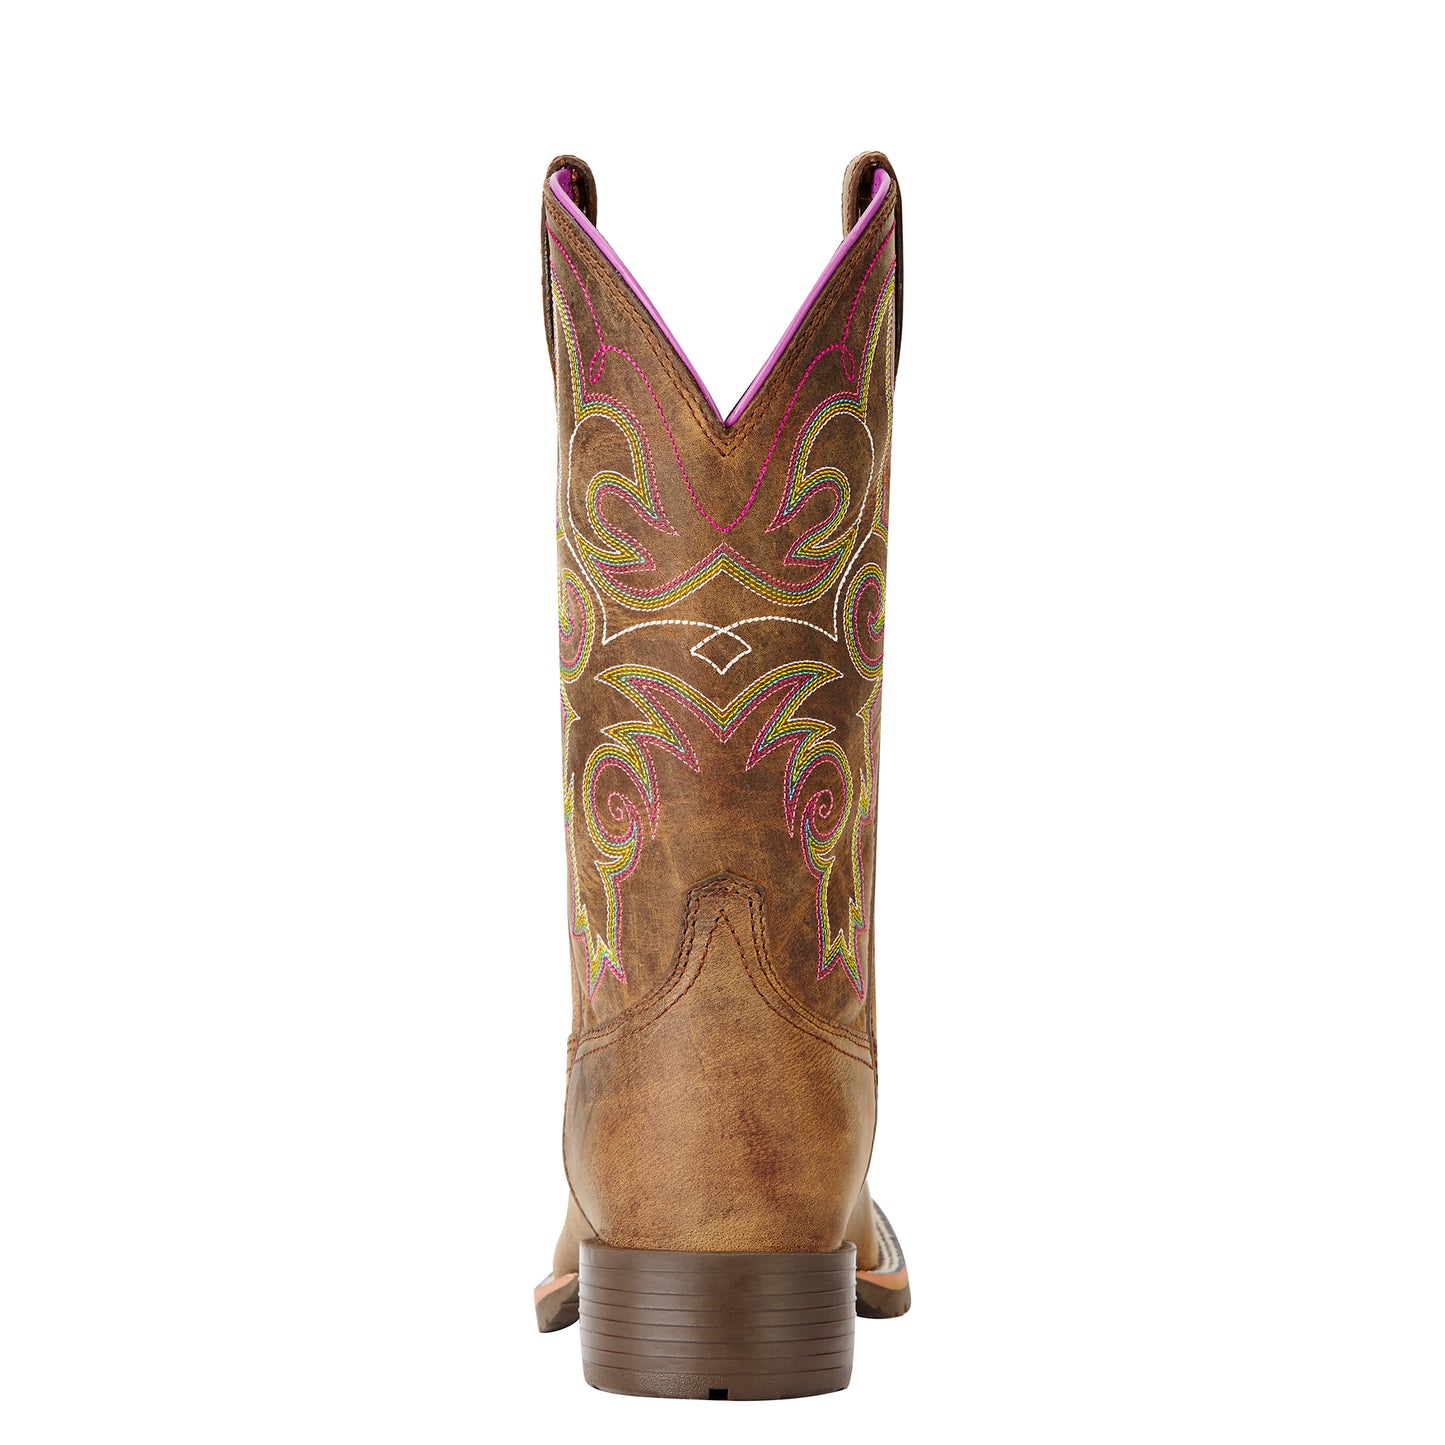 Ariat® Ladies Hybrid Rancher Distressed Brown Western Boots 10018527